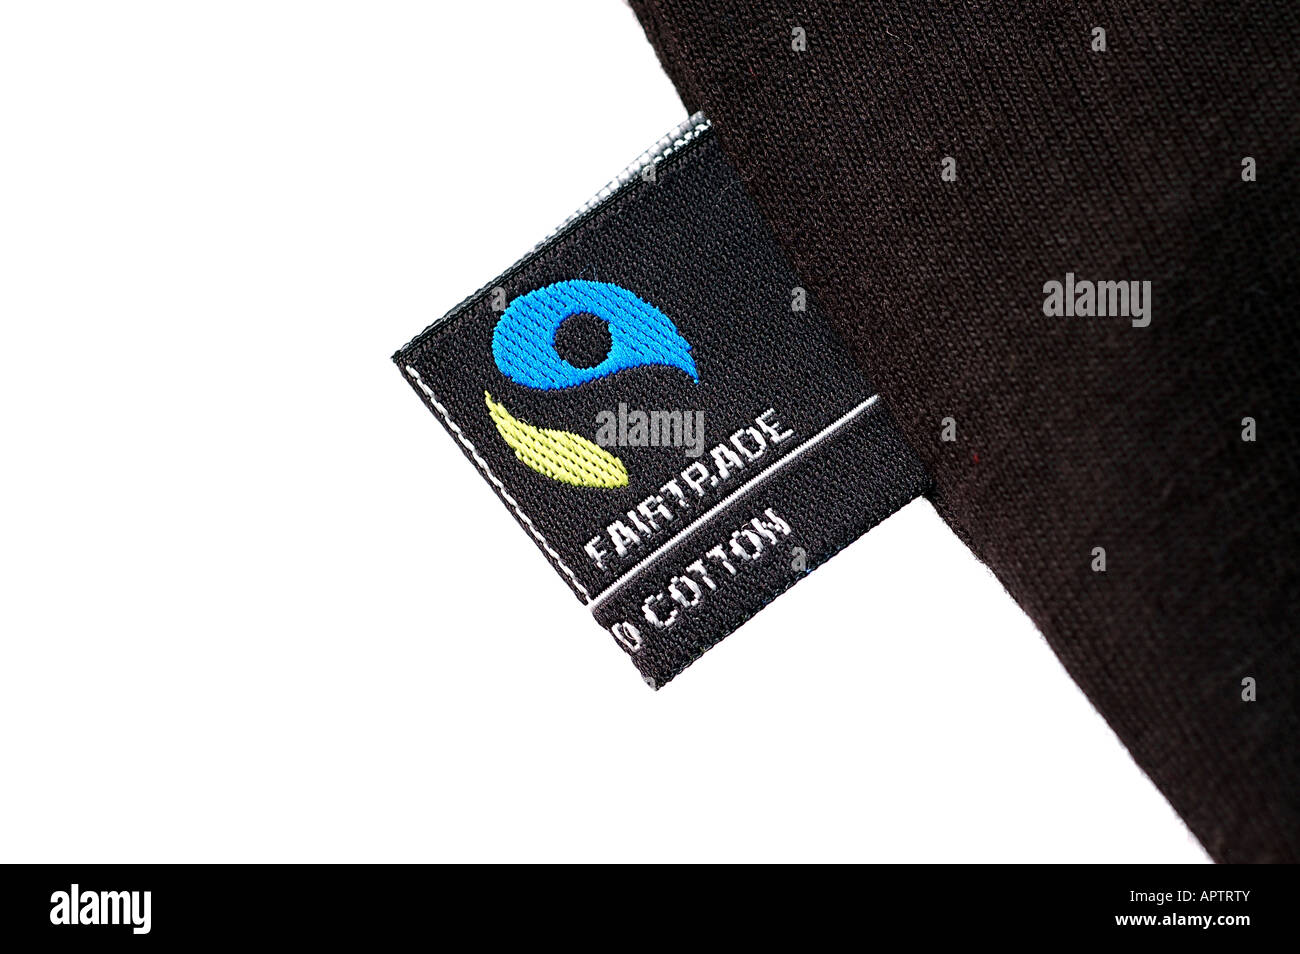 Fair trade clothing logo on a black t-shirt Stock Photo - Alamy